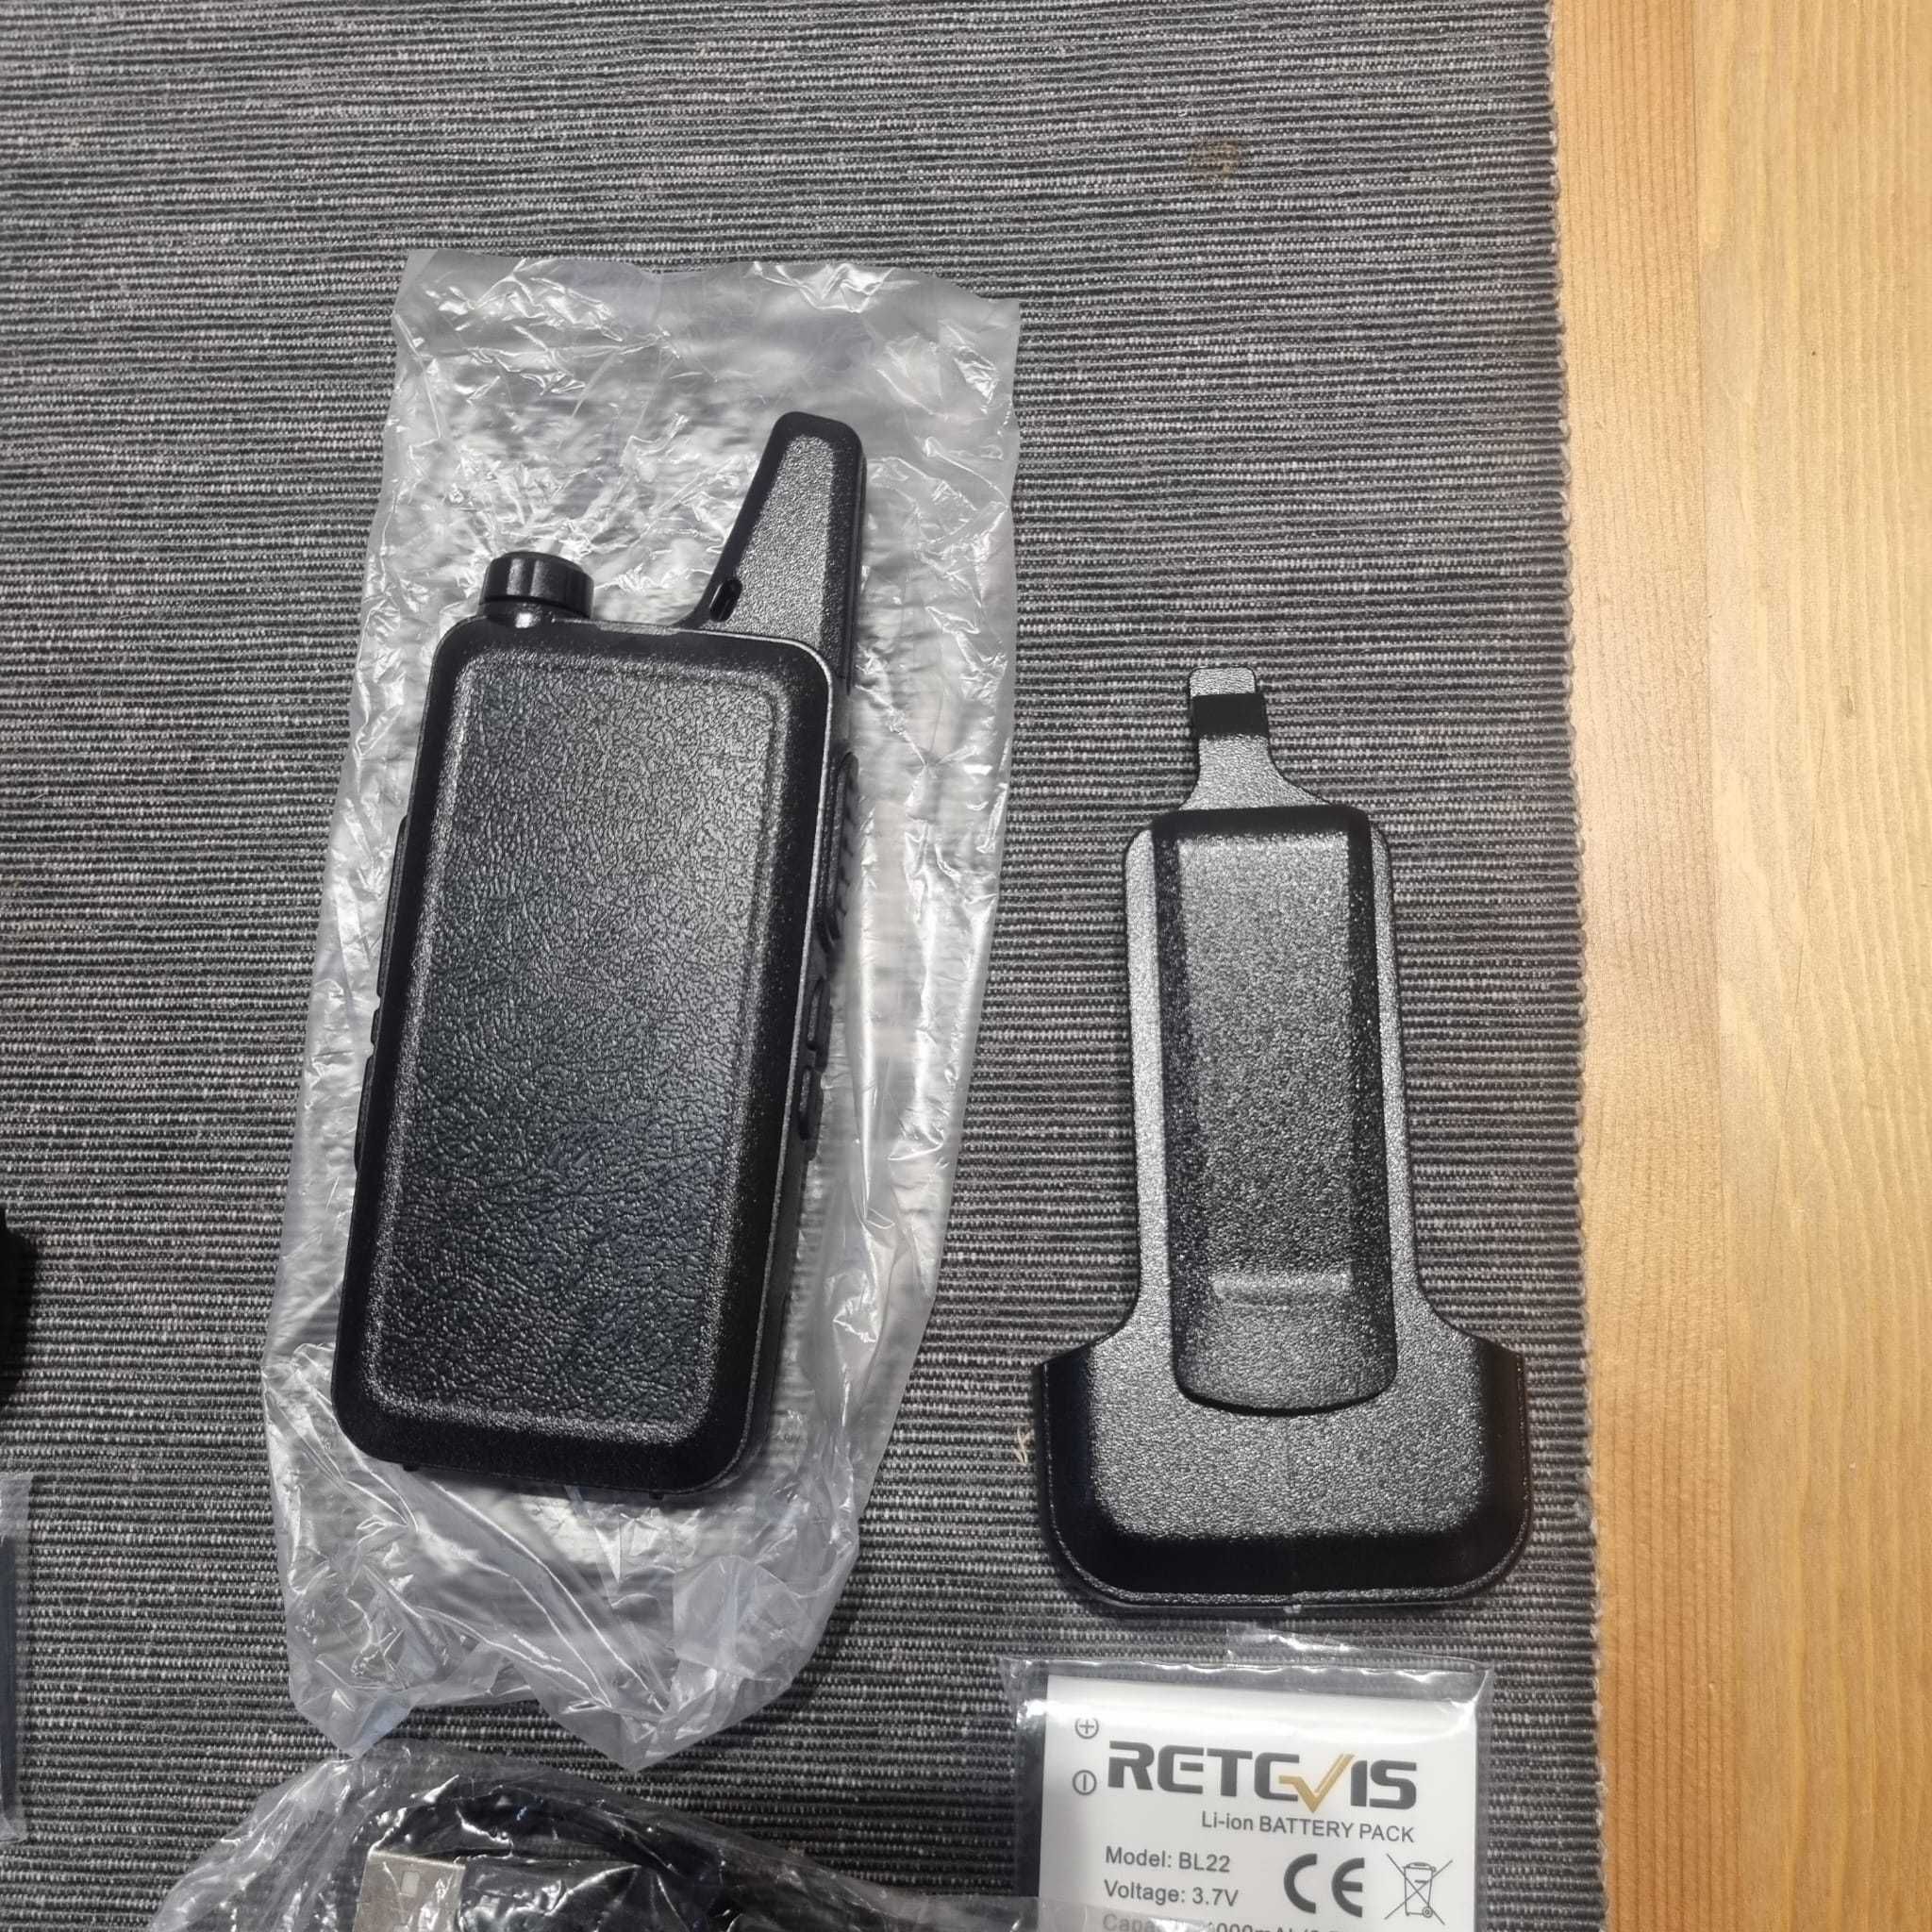 Nowe mocne krótkofalówki walkie-talkie Retevis RT 622